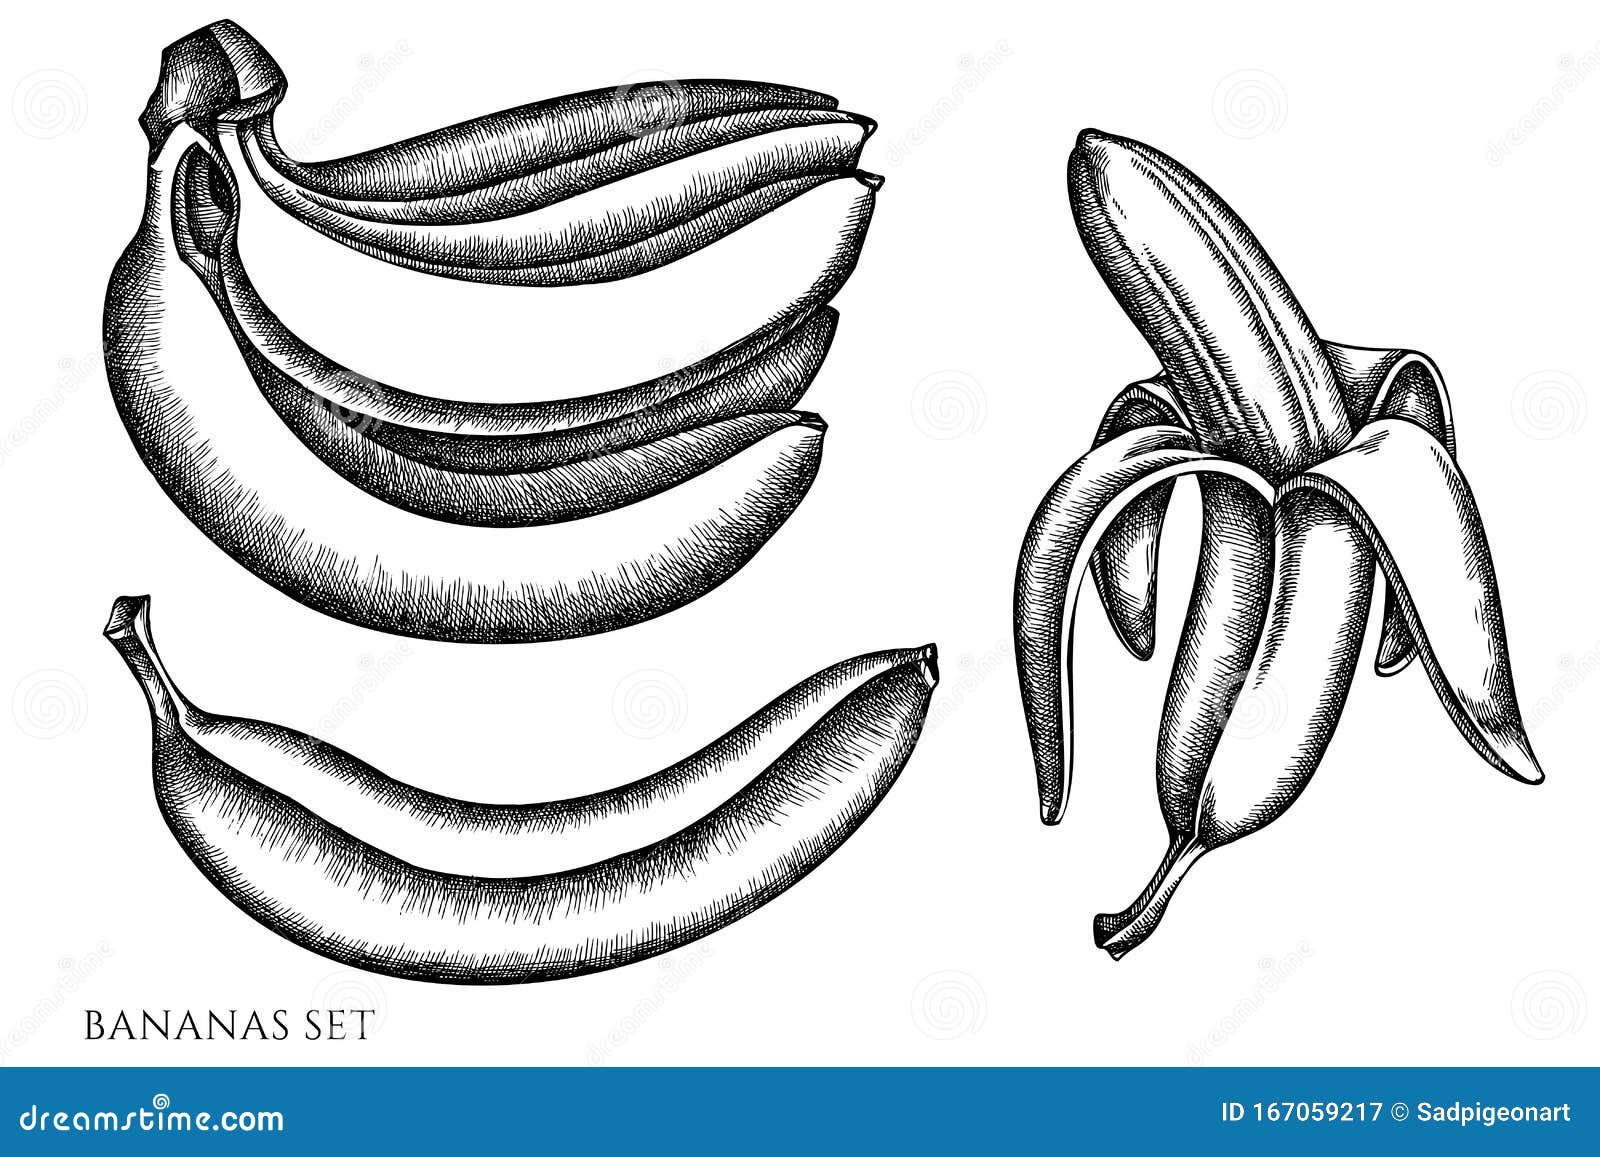 Vector Set of Hand Drawn Black and White Bananas Stock Vector ...